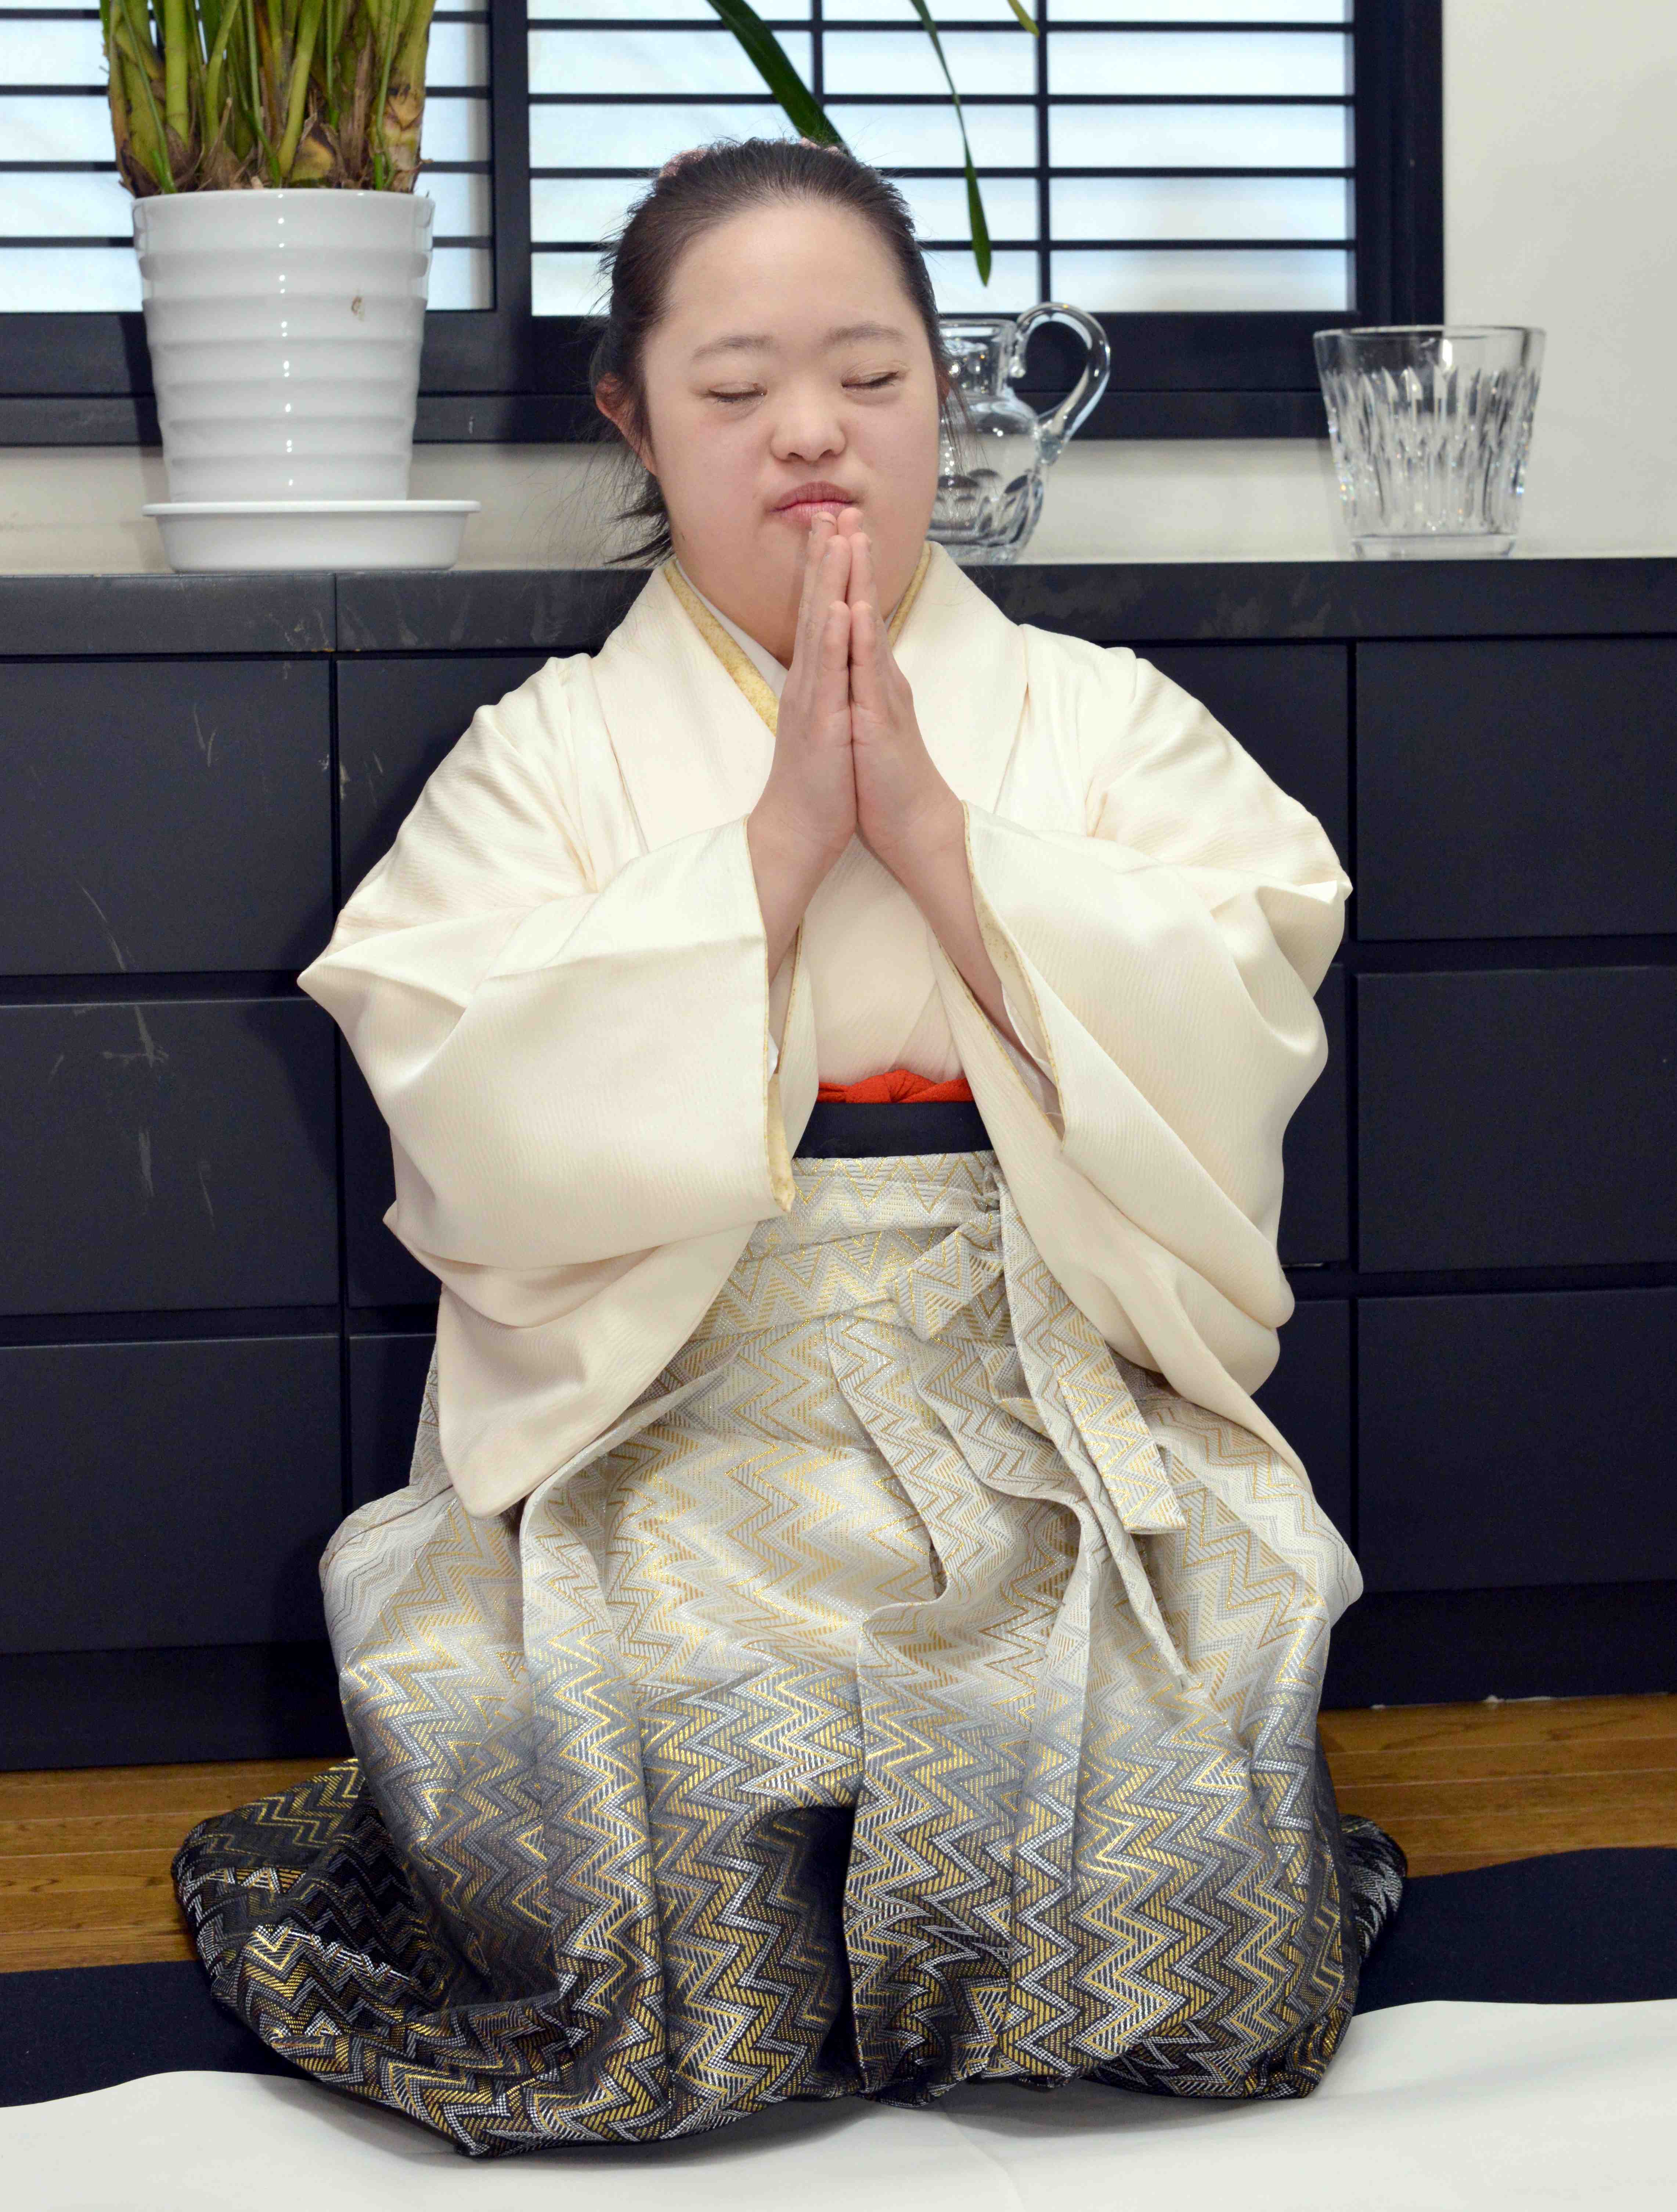 Harmony is Shoko Kanazawa's 2020 New Year Kanji